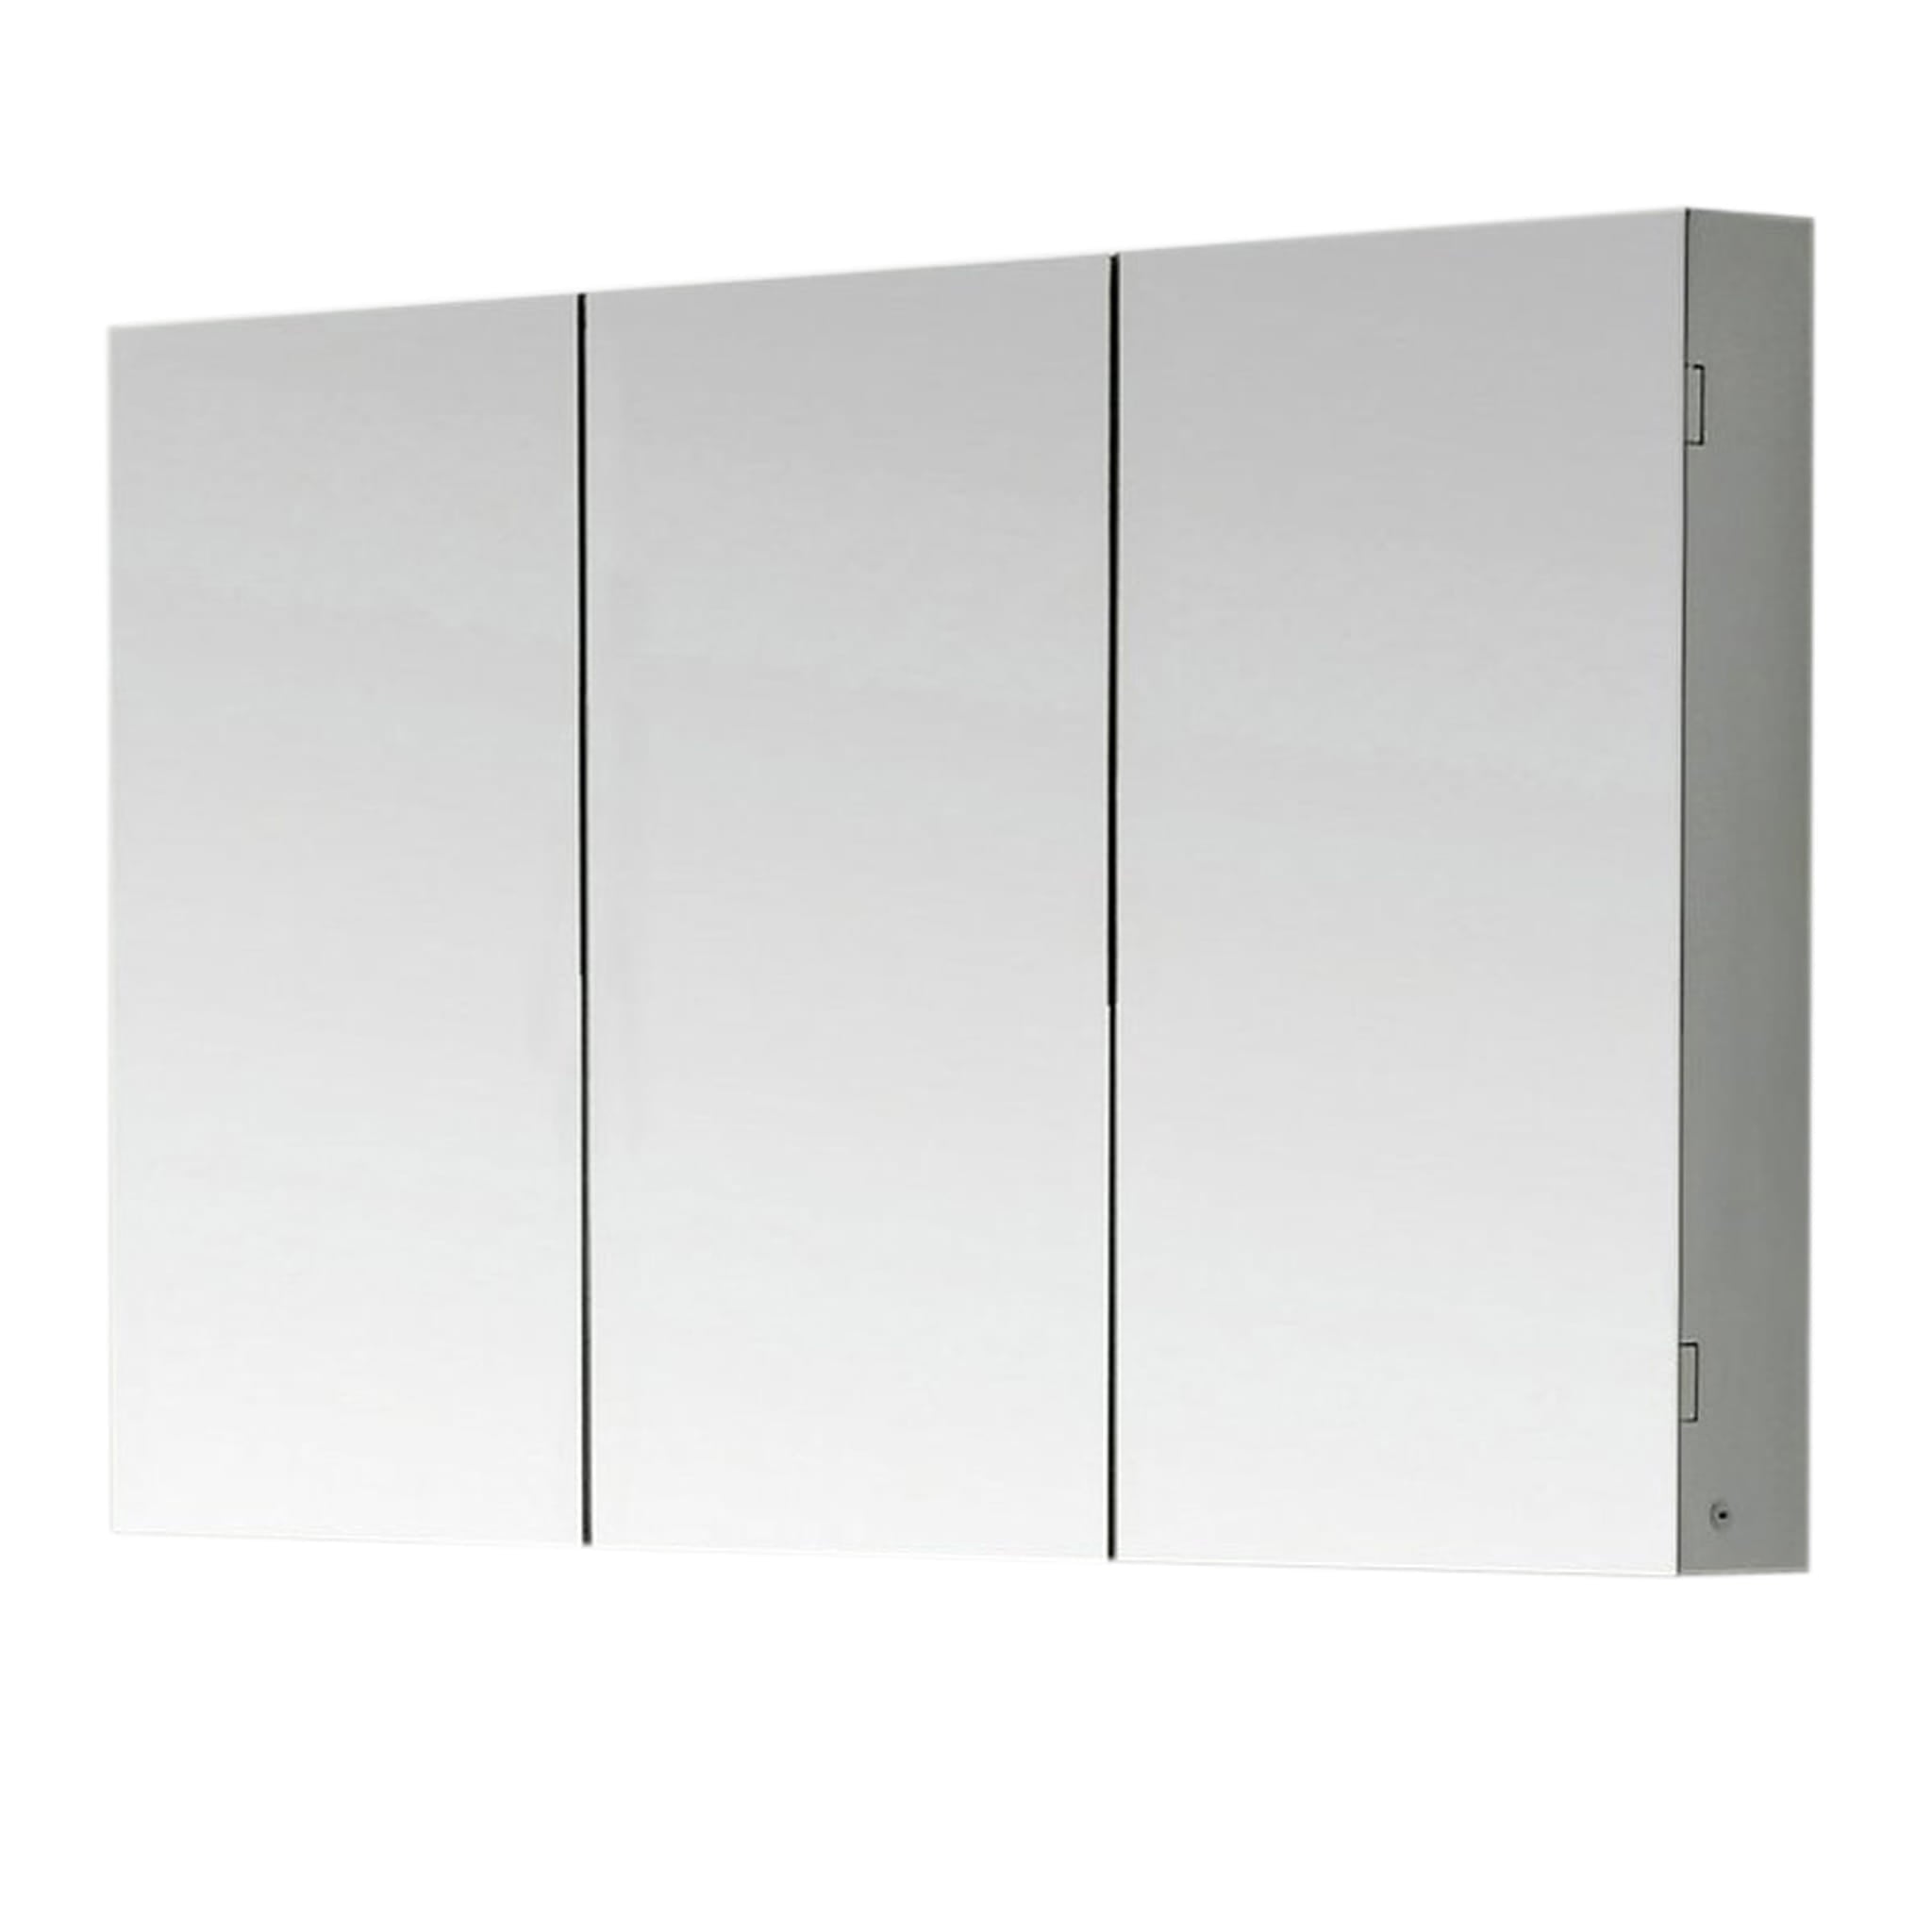 Aquamoon MM60 Frameless Plain 60" x26" Bathroom Medicine Cabinet Mirror Recess or Wall Mounted Installation